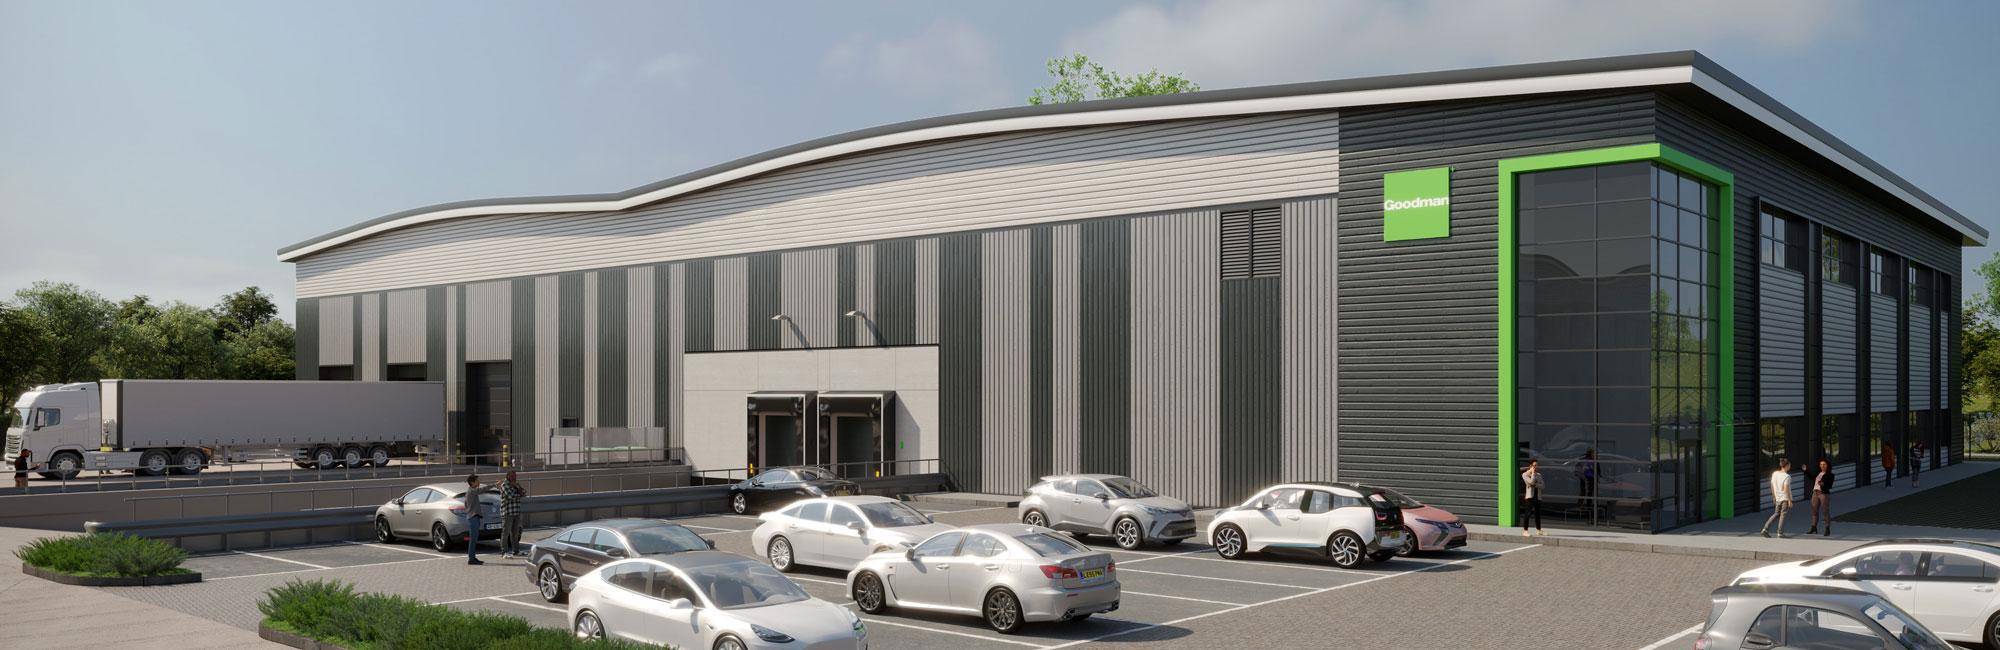 Andover Business Park warehouse CGI